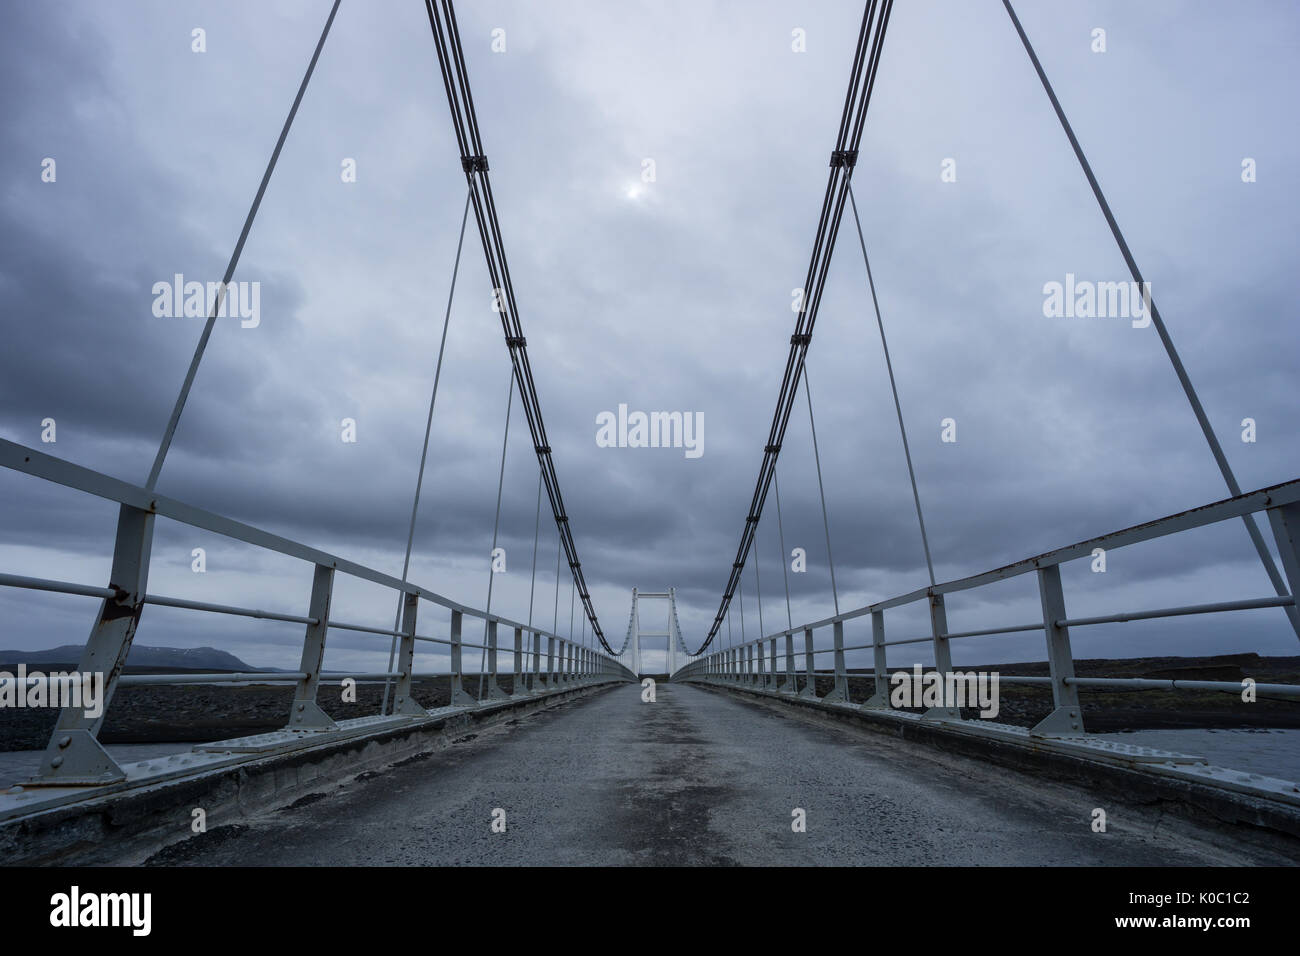 Island - Seilbrücke über den Fluss mit düsterer Atmosphäre Stockfoto